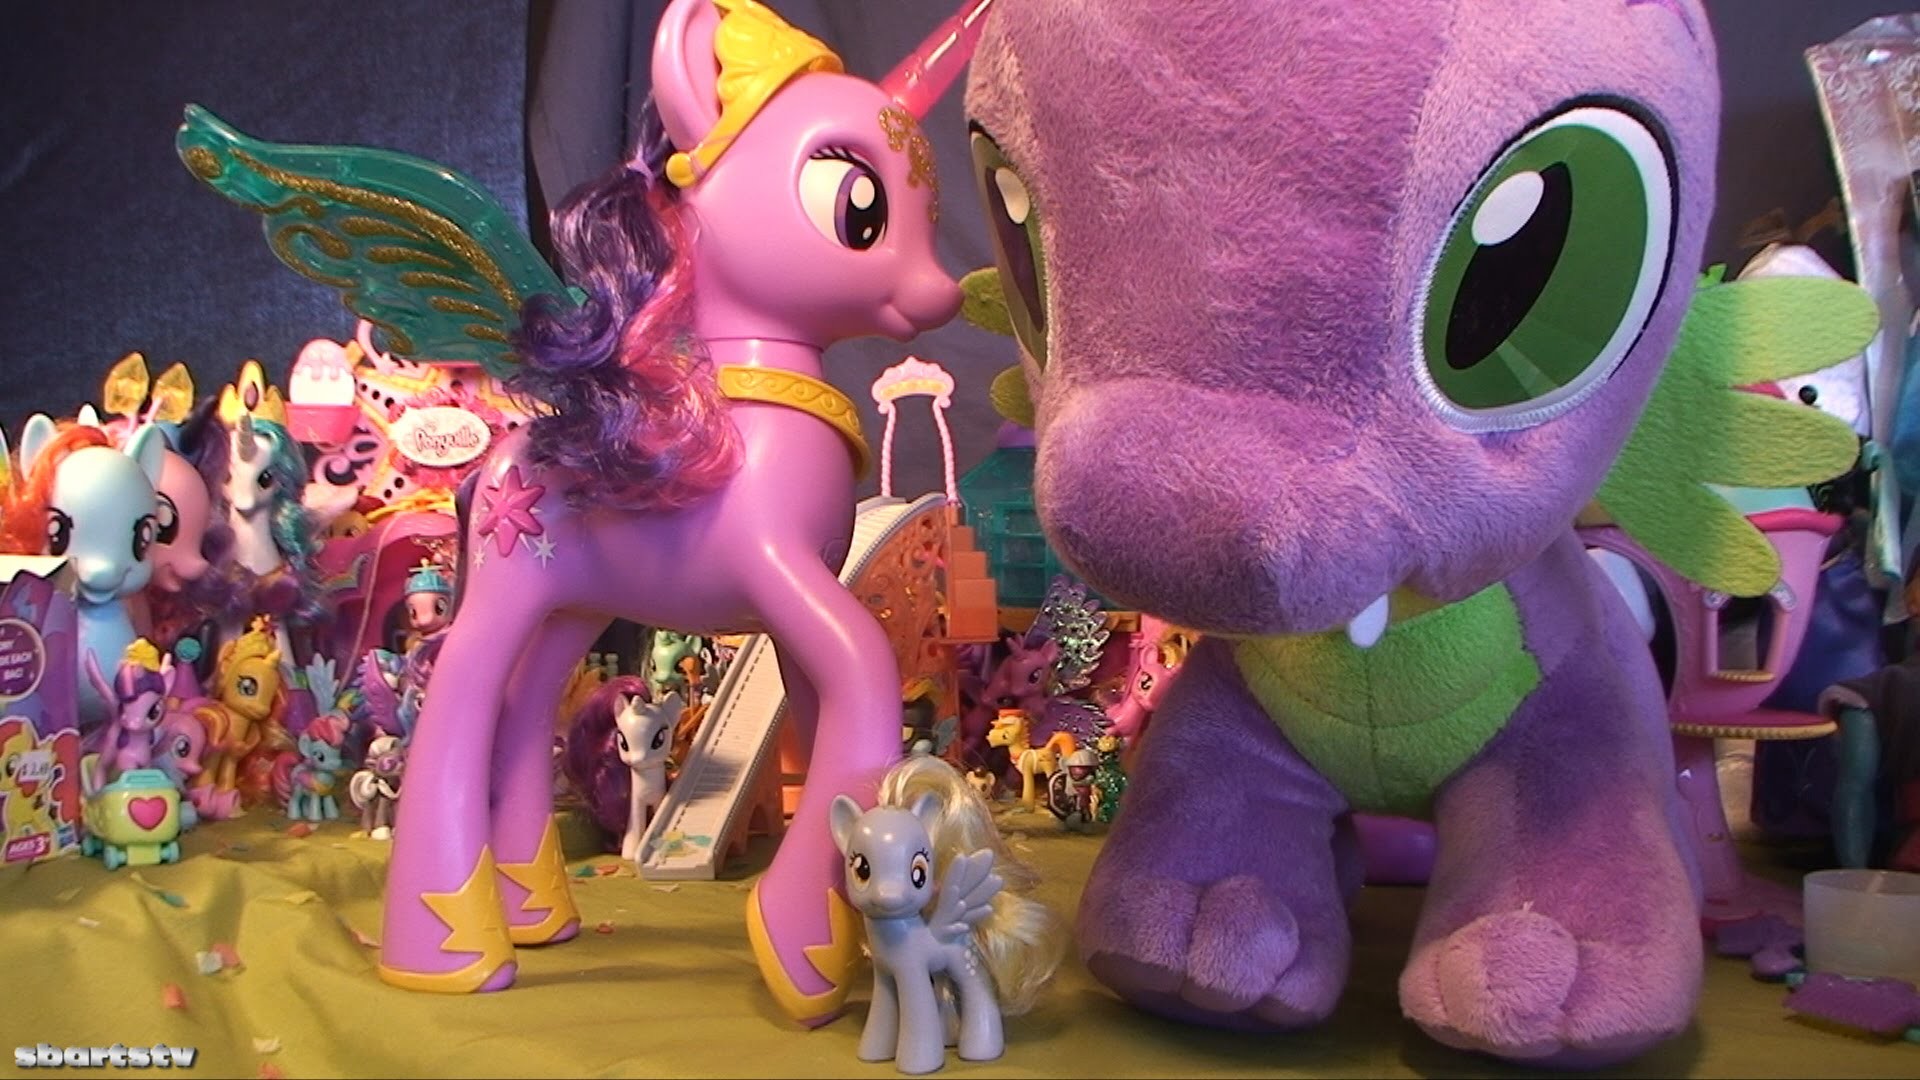 1920x1080 My Little Pony Friendship is Magic Princess Twilight Sparkle Giant Animated  Toy MLP PFFs - YouTube